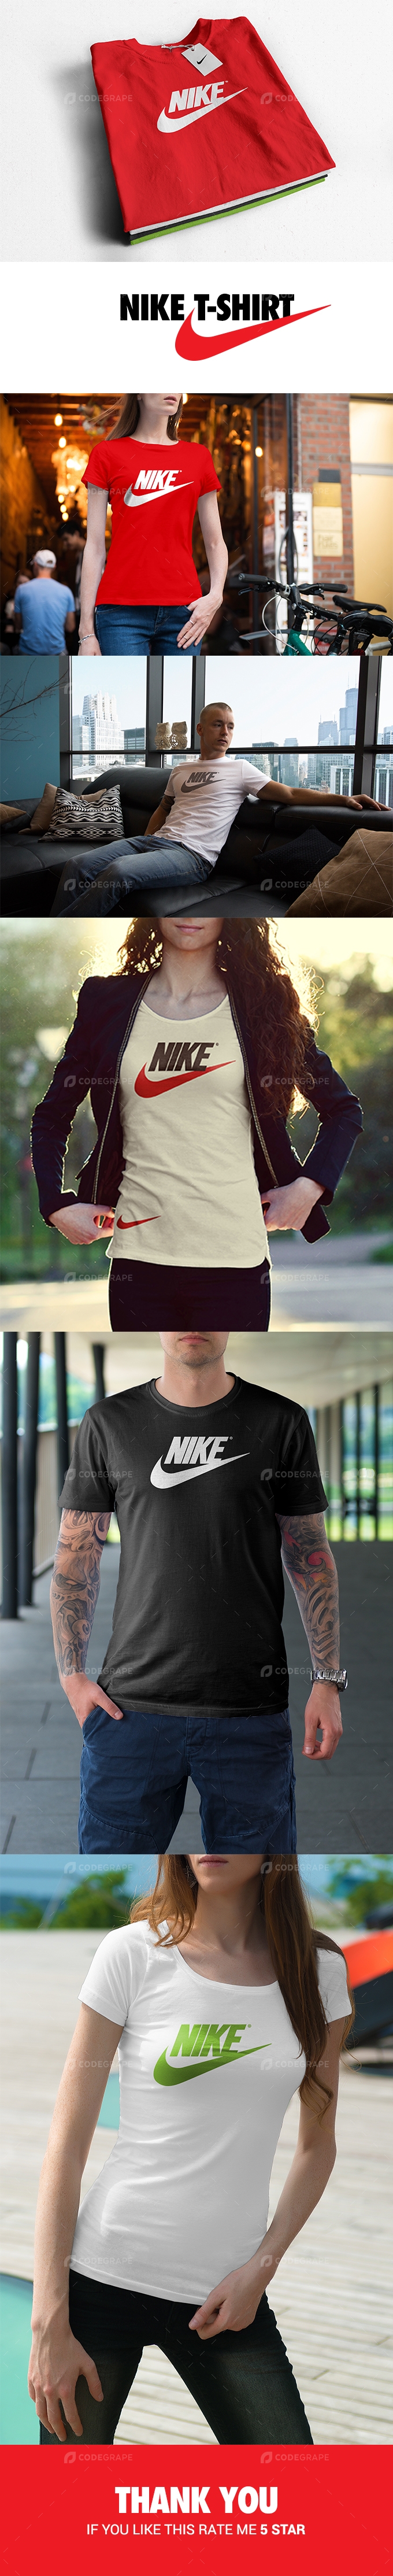 NIKE T-shirt Design